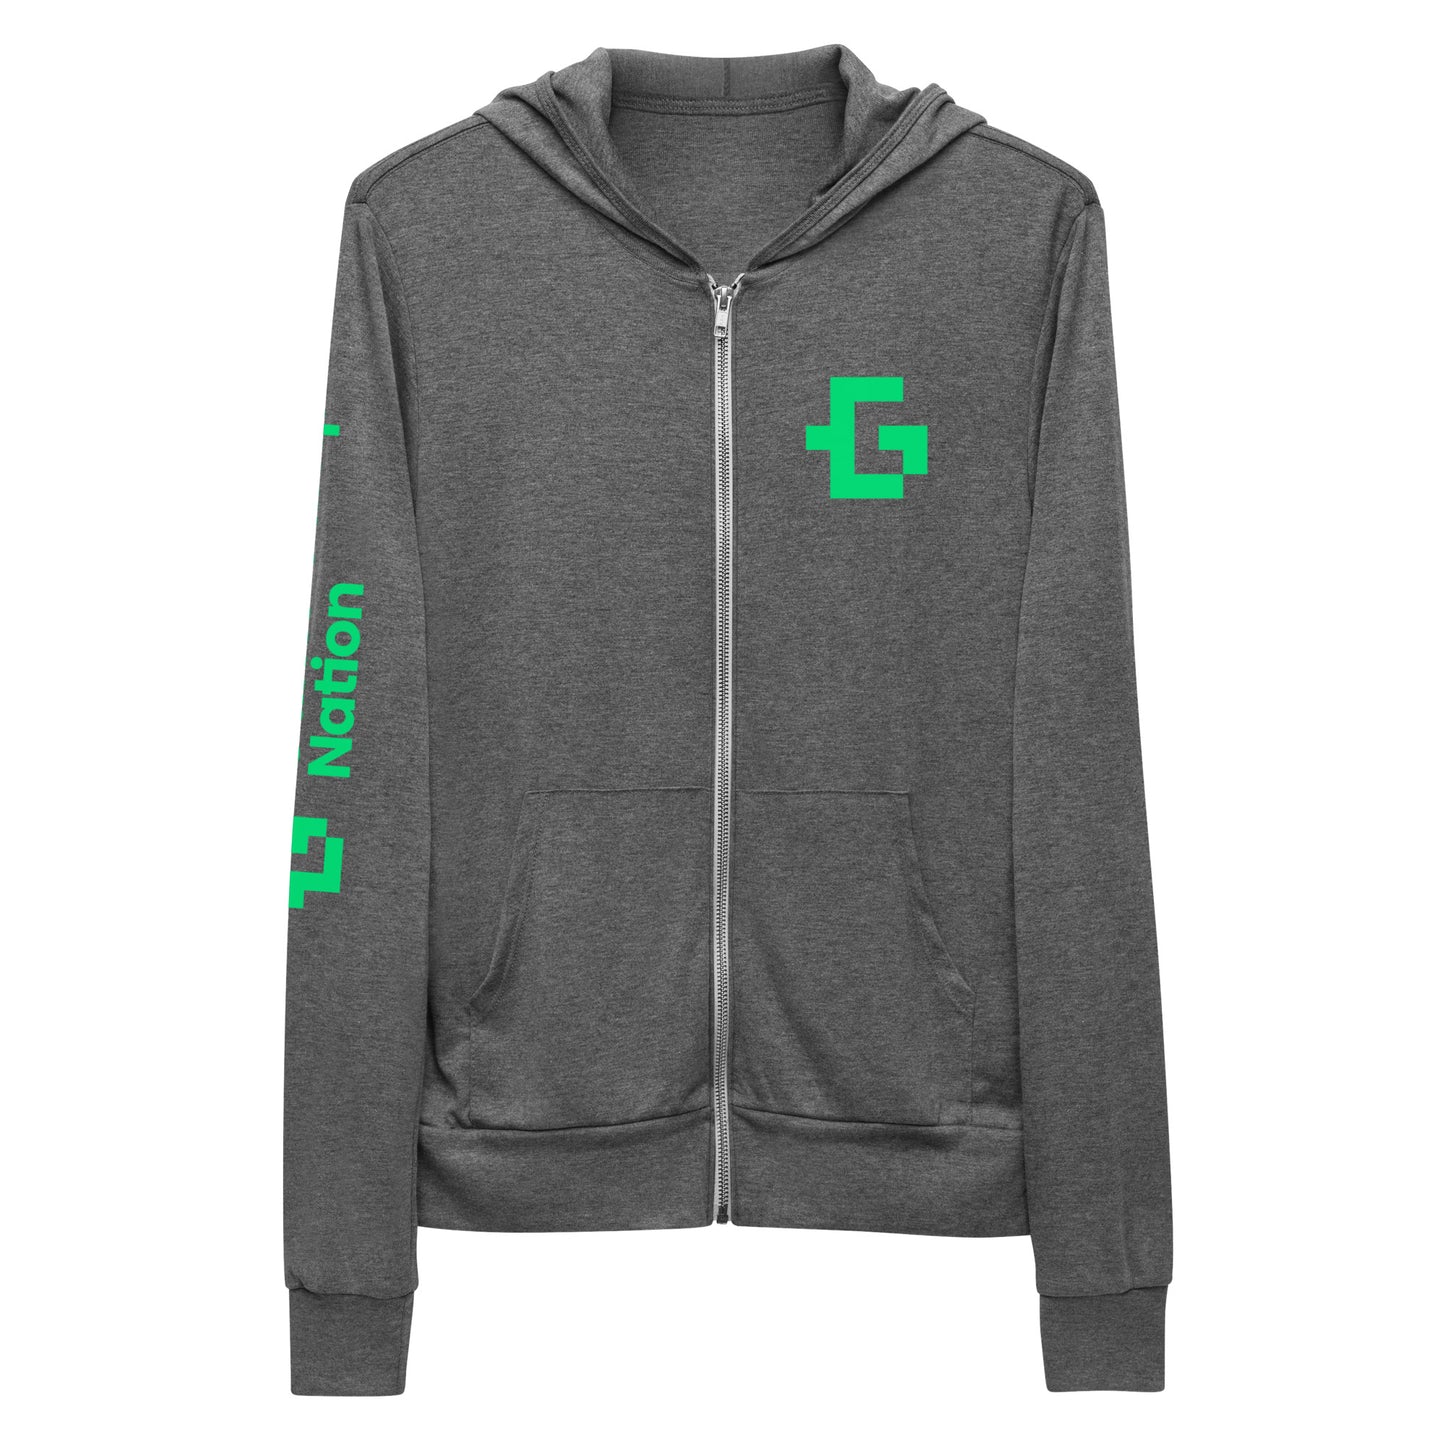 Green logo unisex zip hoodie